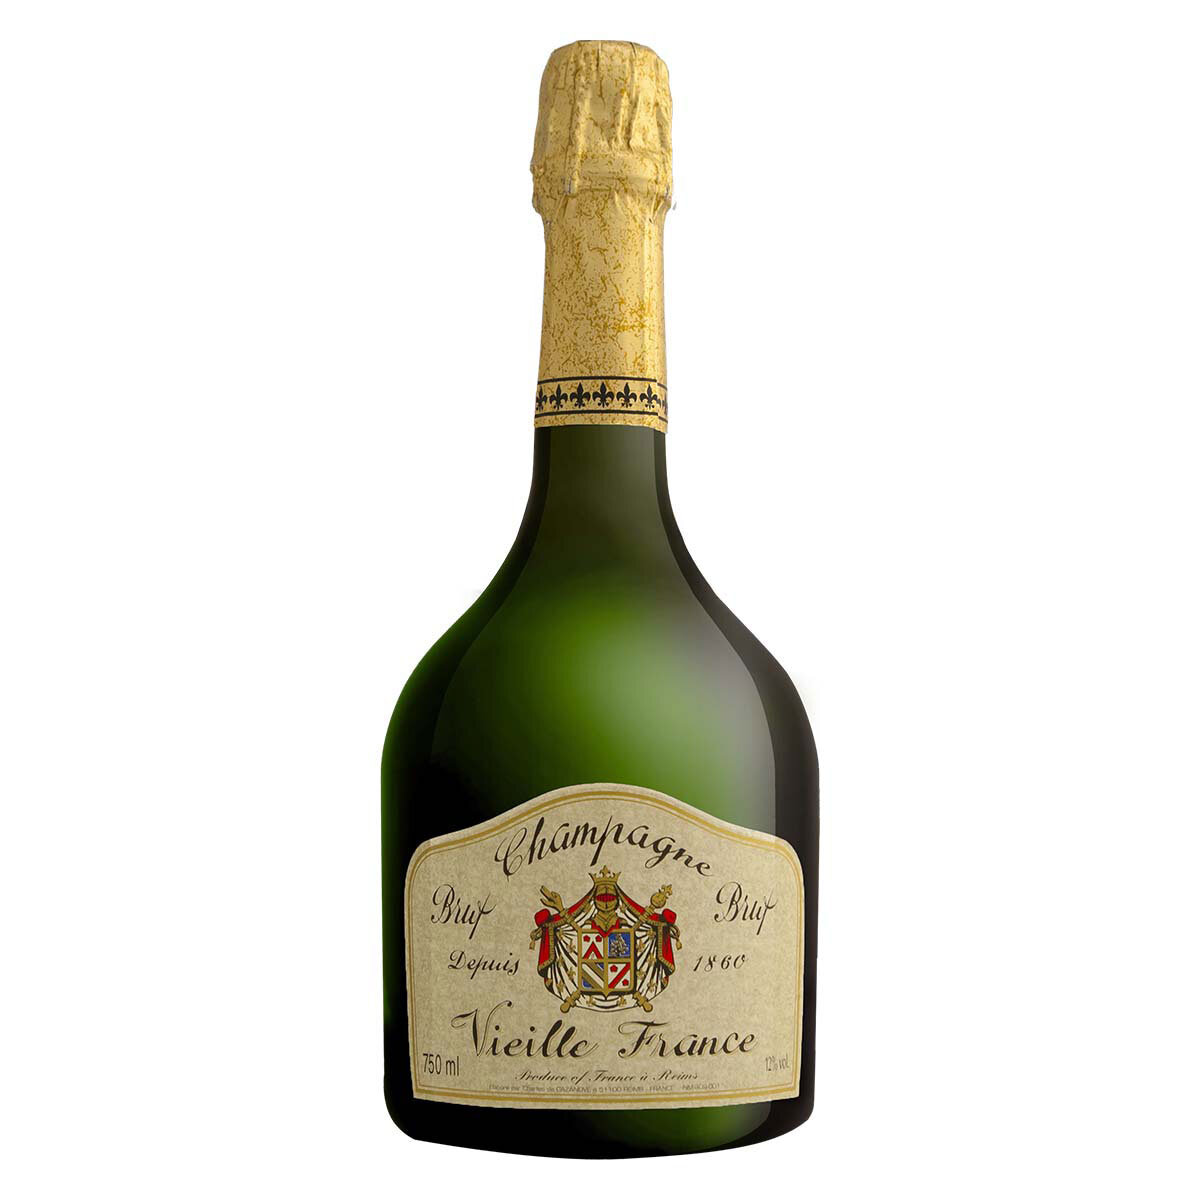 Bottle shot of Vieille France Champagne Brut